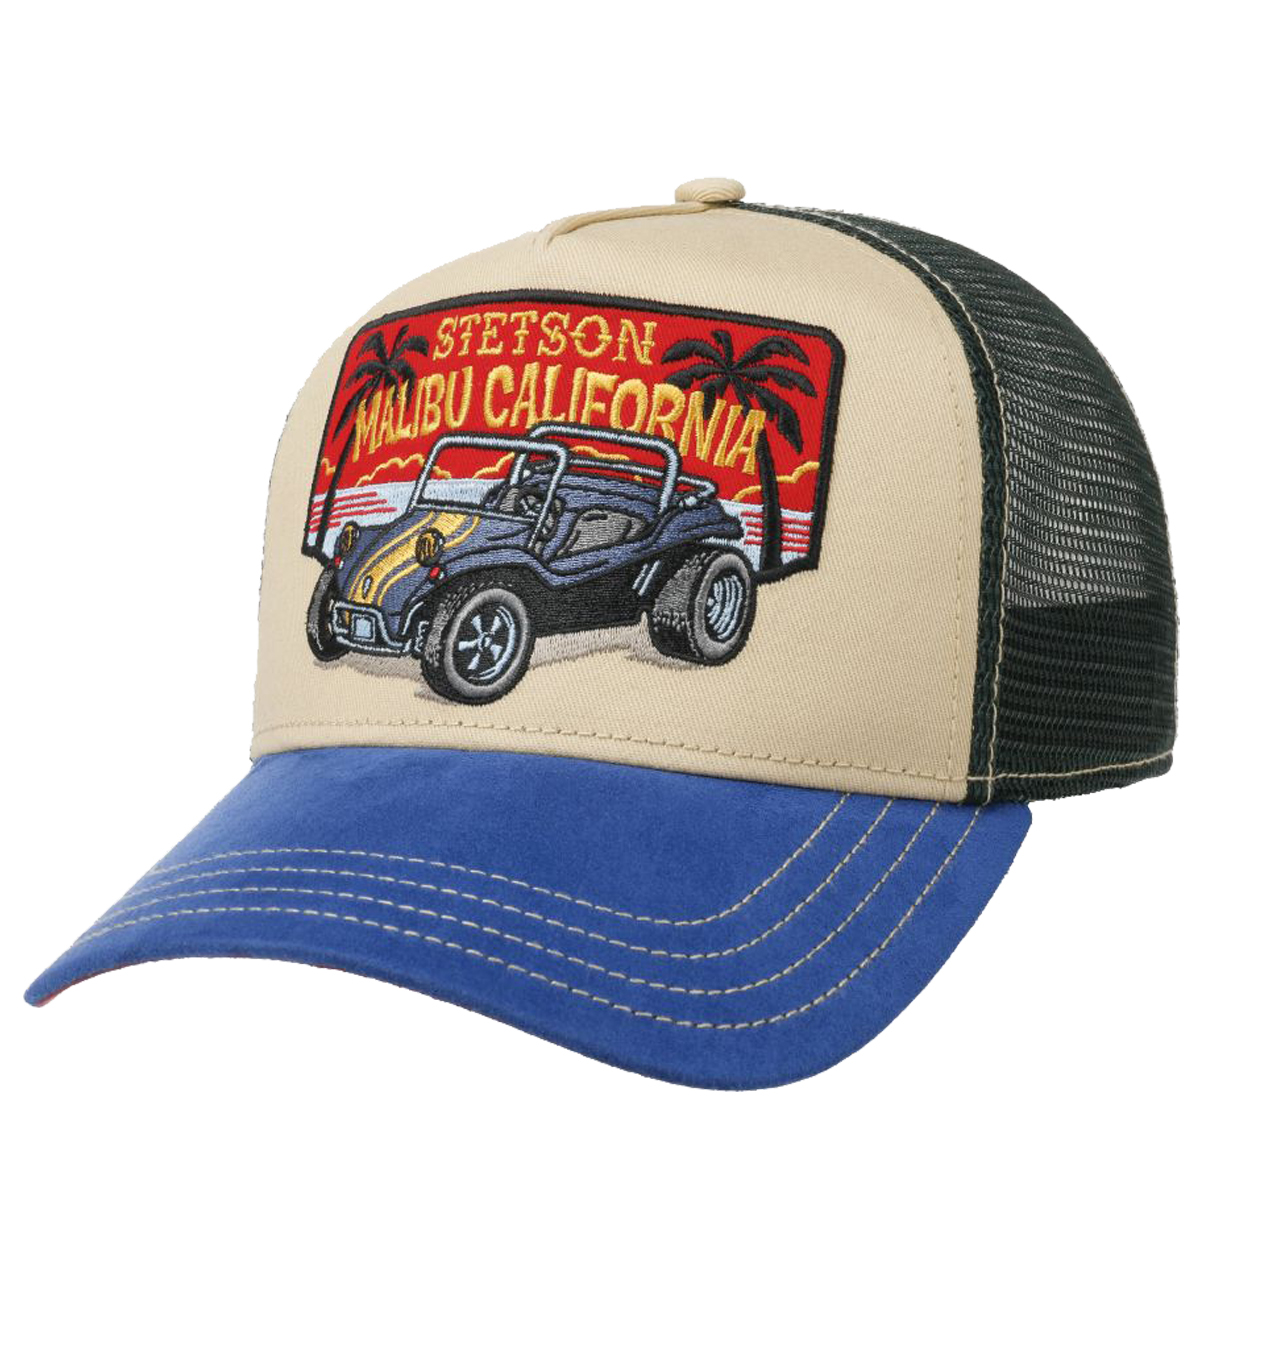 Stetson - Malibu California Trucker Cap - Beige